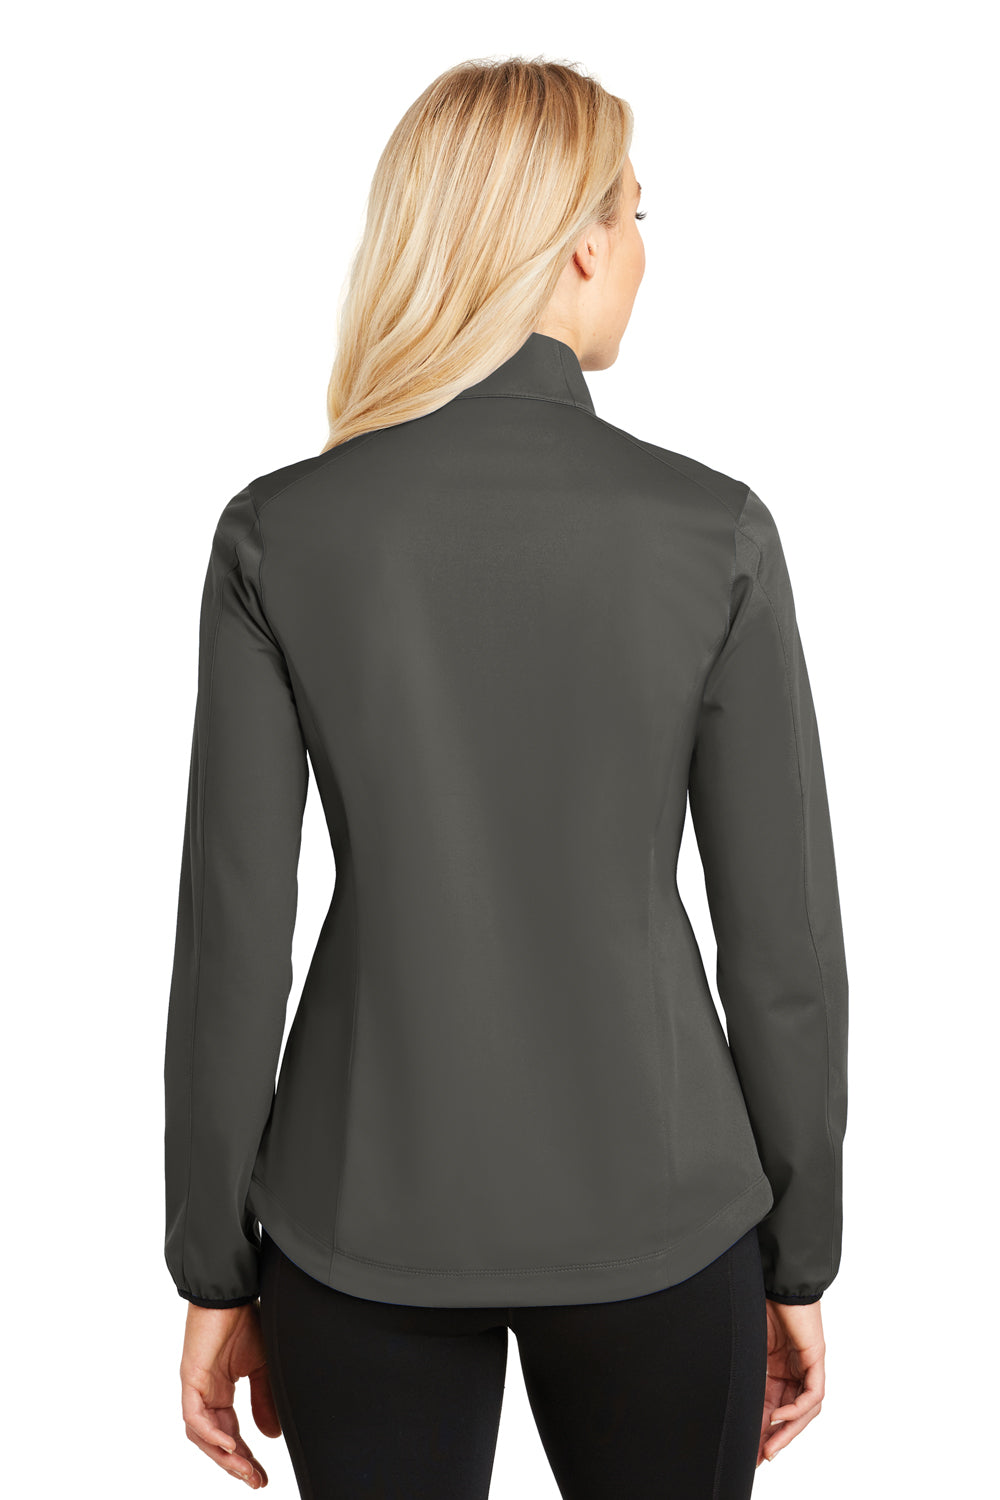 Port Authority L717 Womens Active Wind & Water Resistant Full Zip Jacket Grey Steel Back